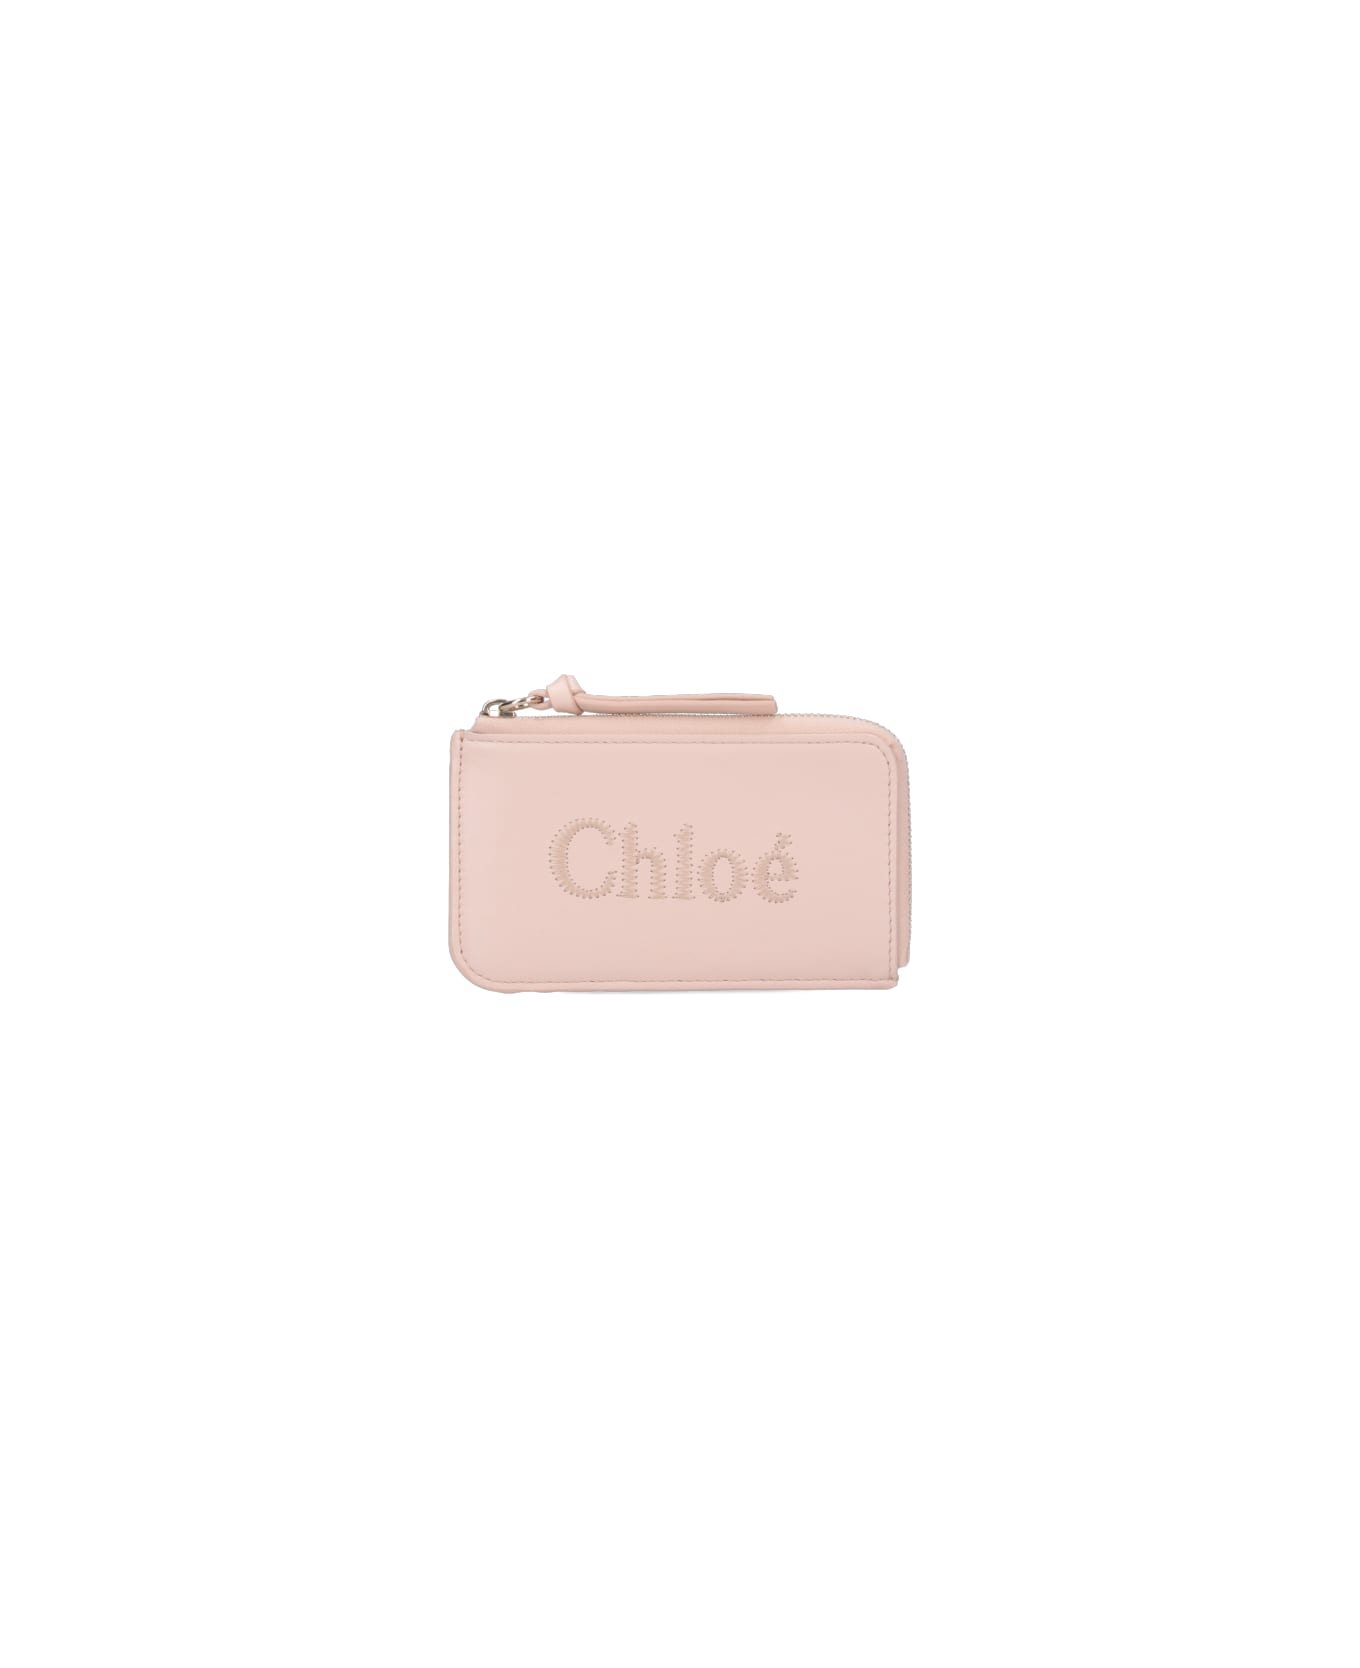 Chloé Zipped Card Holder - Pink